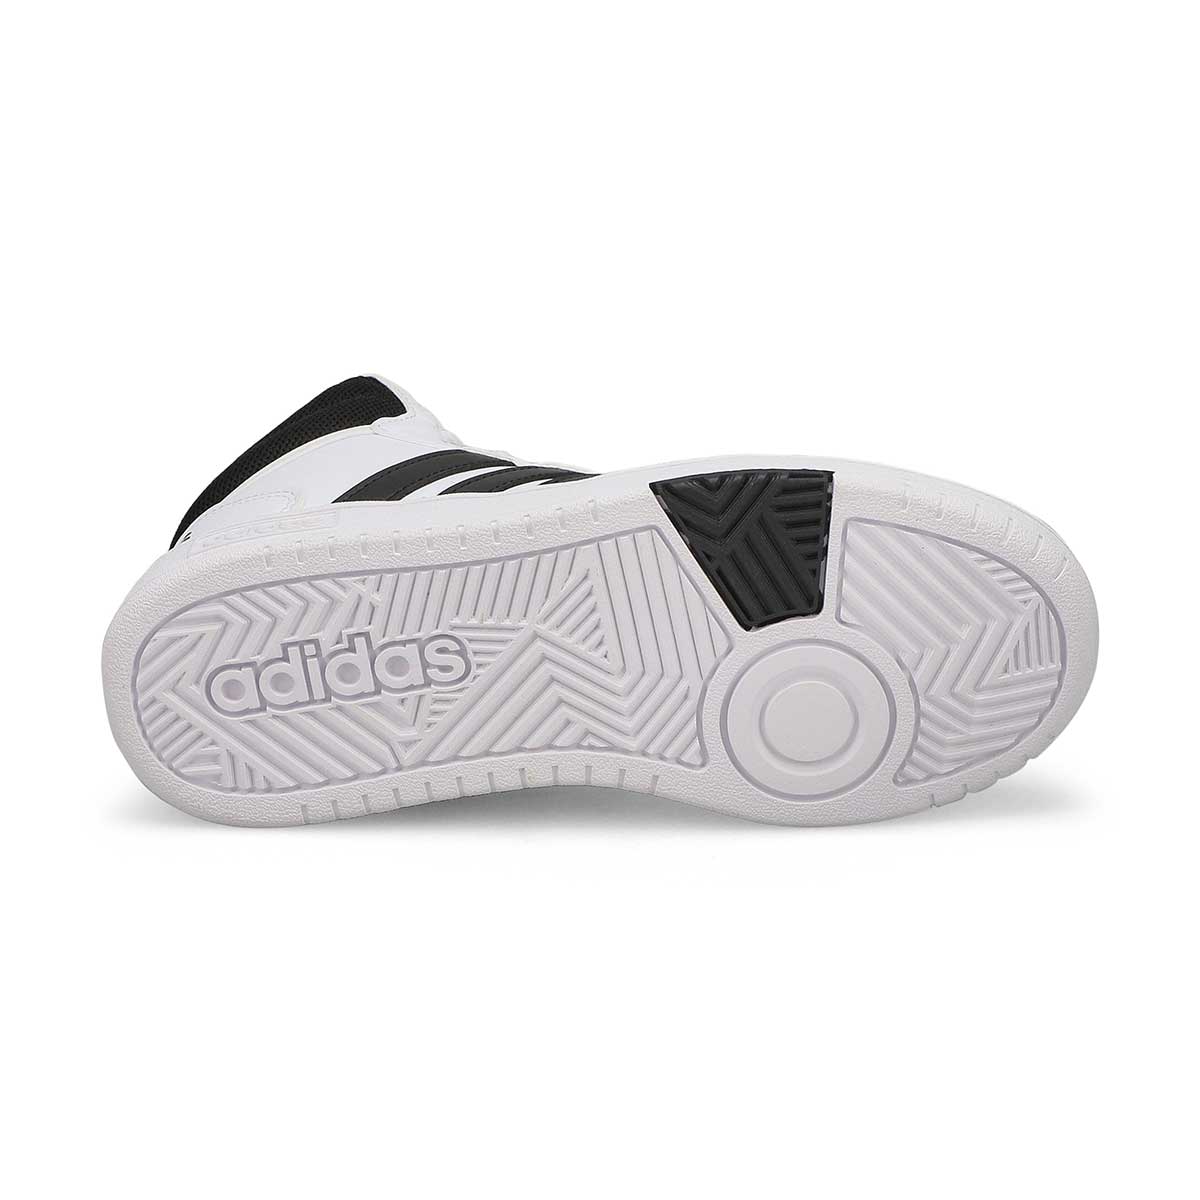 Kds Hoops Mid 3.0 K Sneaker - White/Black